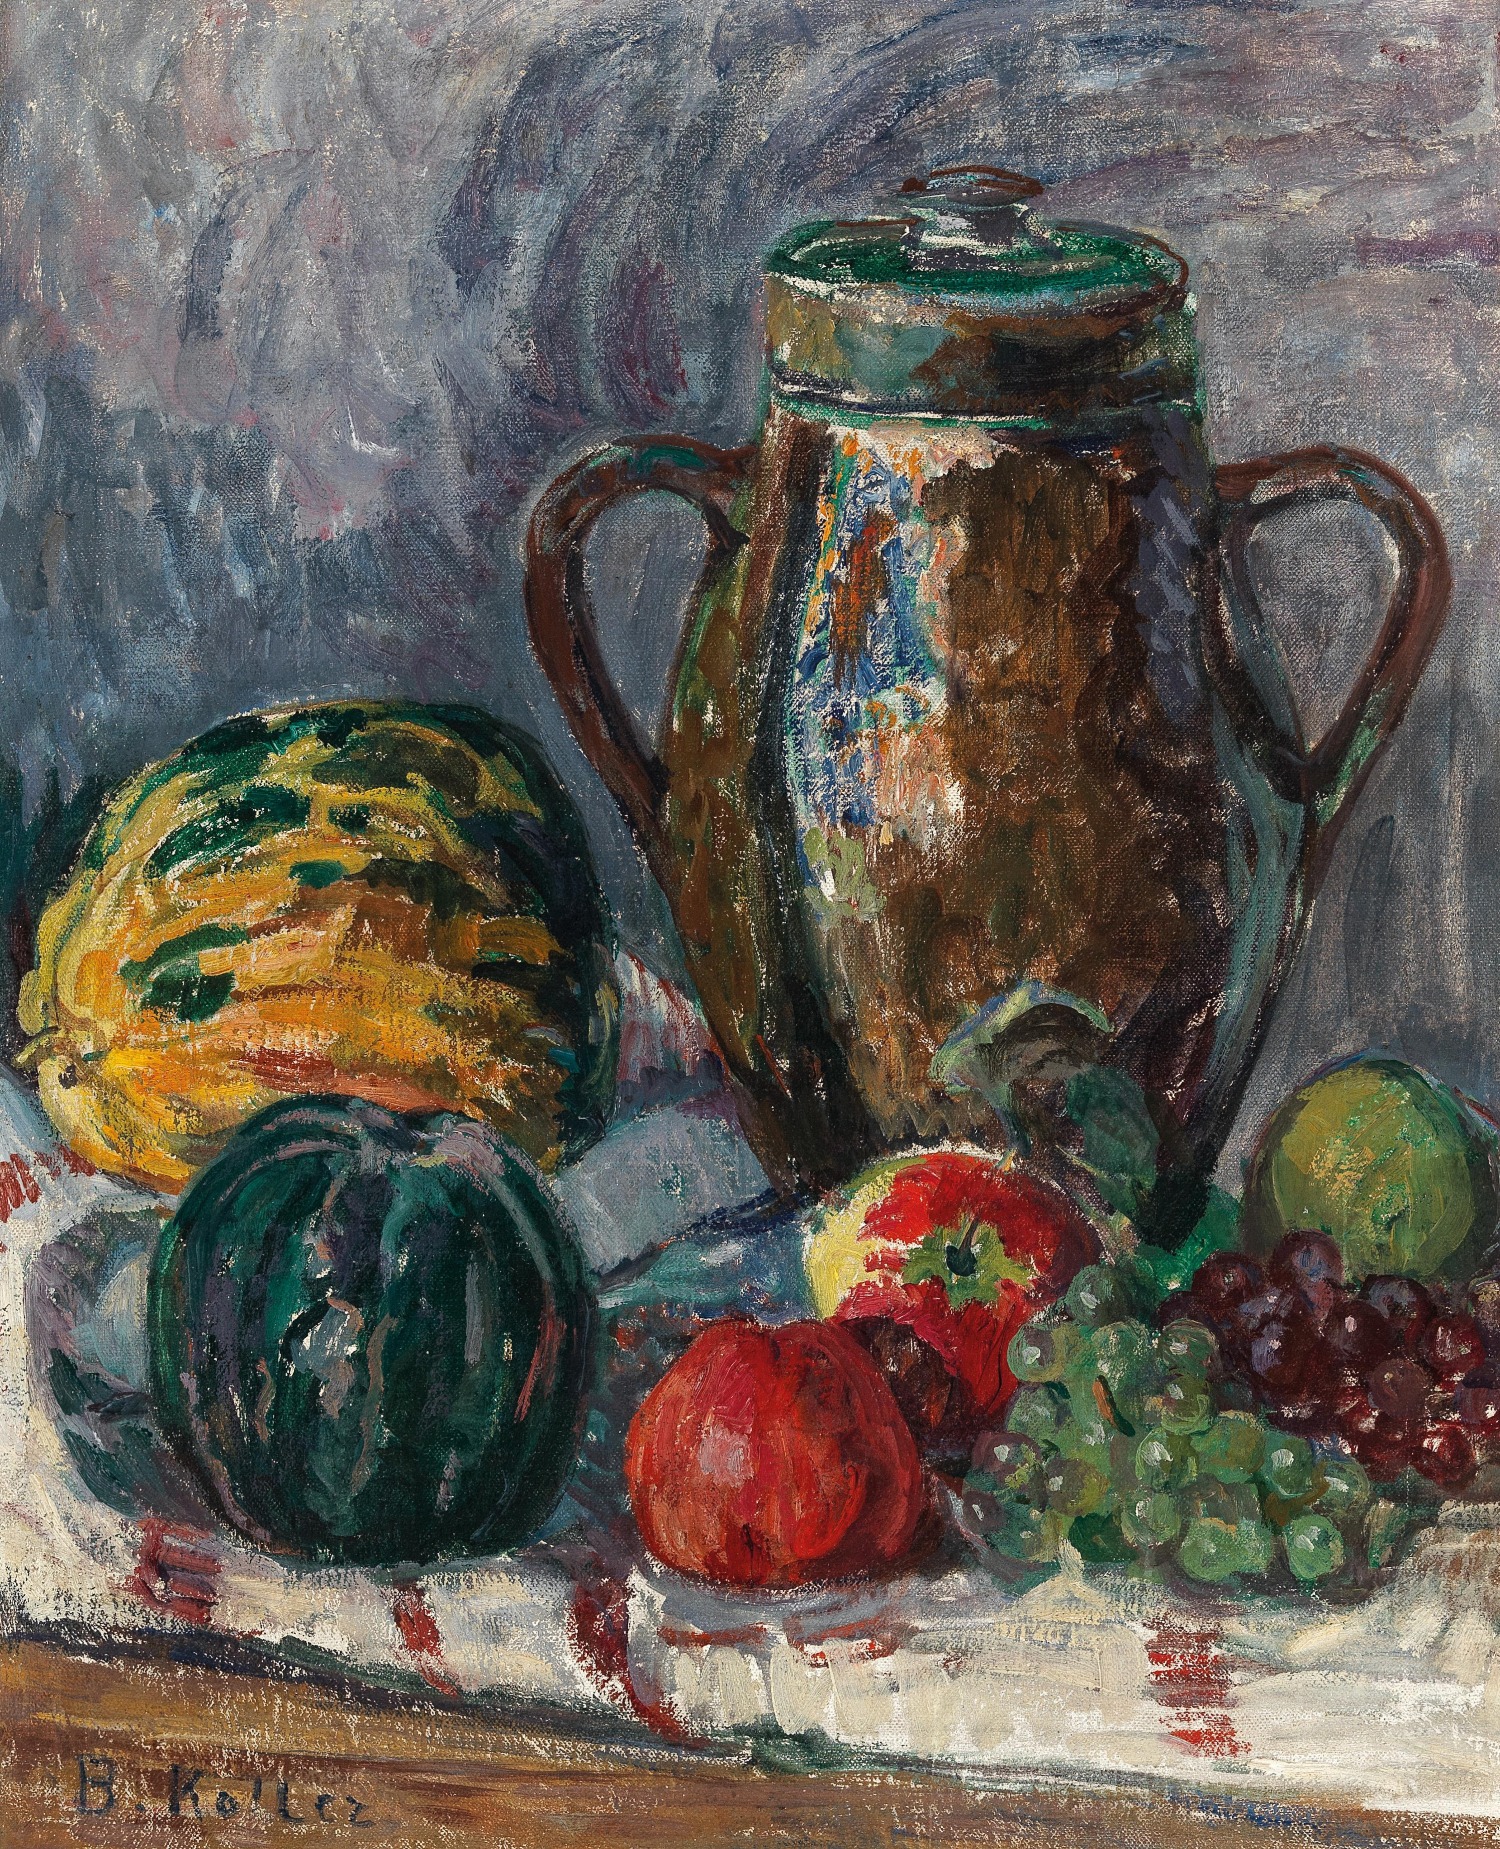 Broncia Koller Pinell (1863-1934) "Martwa natura z owocami", źródło: Dorotheum